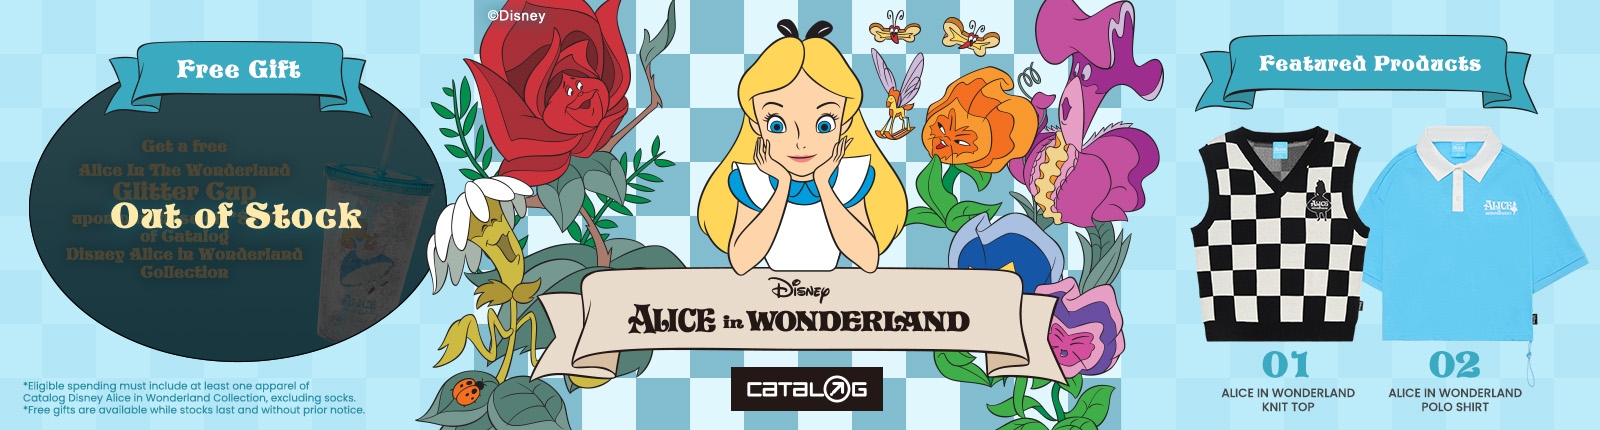 Catalog Disney Alice in Wonderland Collection